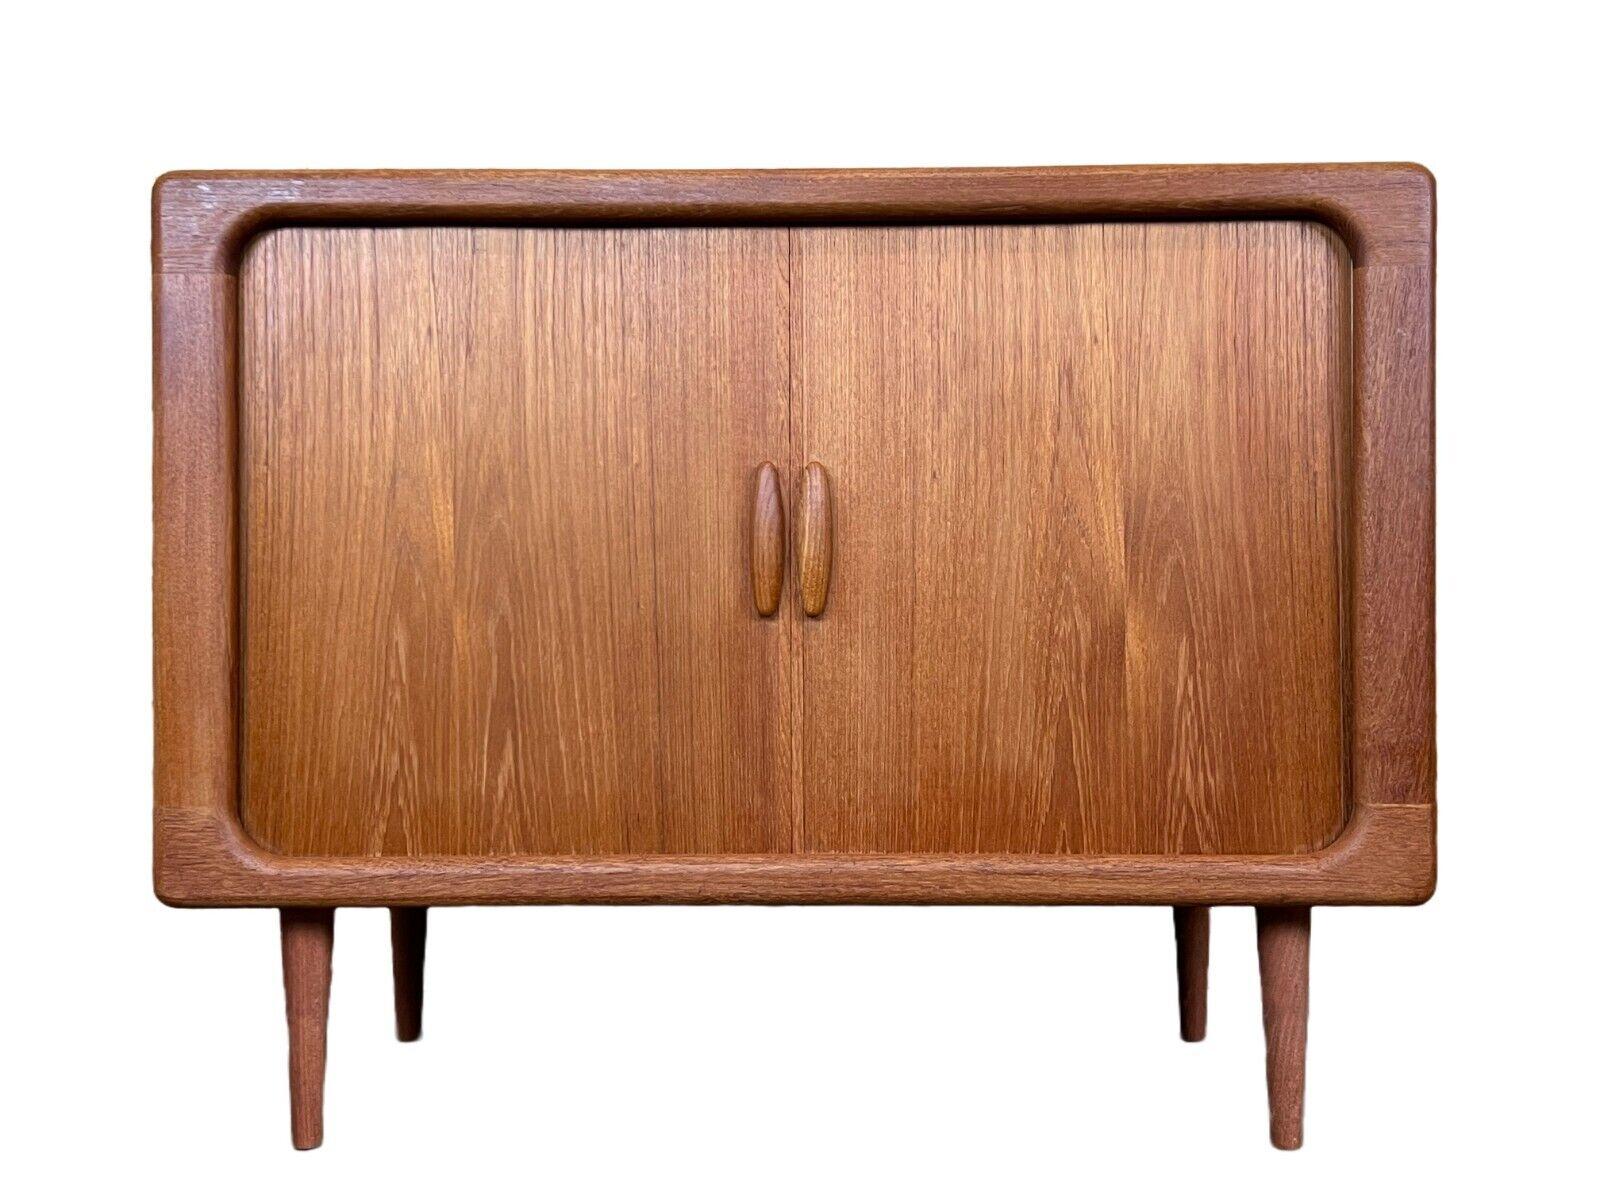 1960s-1970s teak Dyrlund sideboard Credenza cabinet Danish Modern Design

Object: sideboard

Manufacturer: Dyrlund

Condition: good

Age: around 1960-1970

Dimensions:

Width = 102cm
Depth = 52cm
Height = 80cm

Other notes:

The